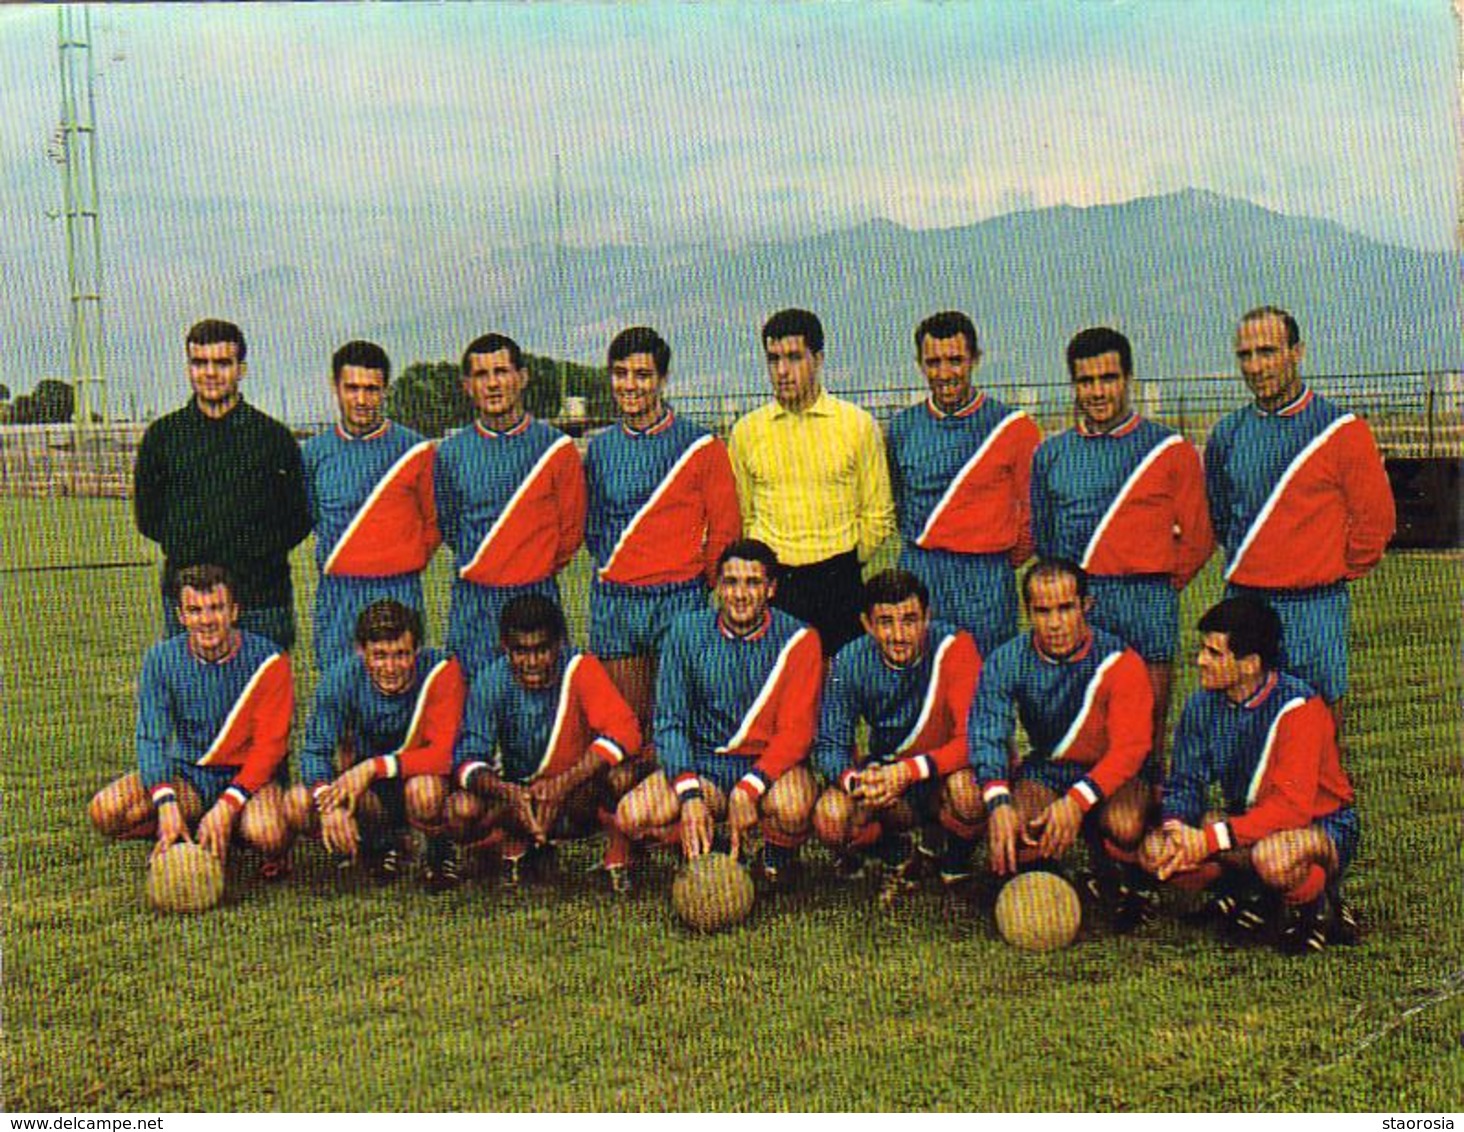 ÉQUIPE DE FOOTBALL DU GAZELEC D'AJACCIO SAISON 196561966 Présentée Par Nice Matin - Football